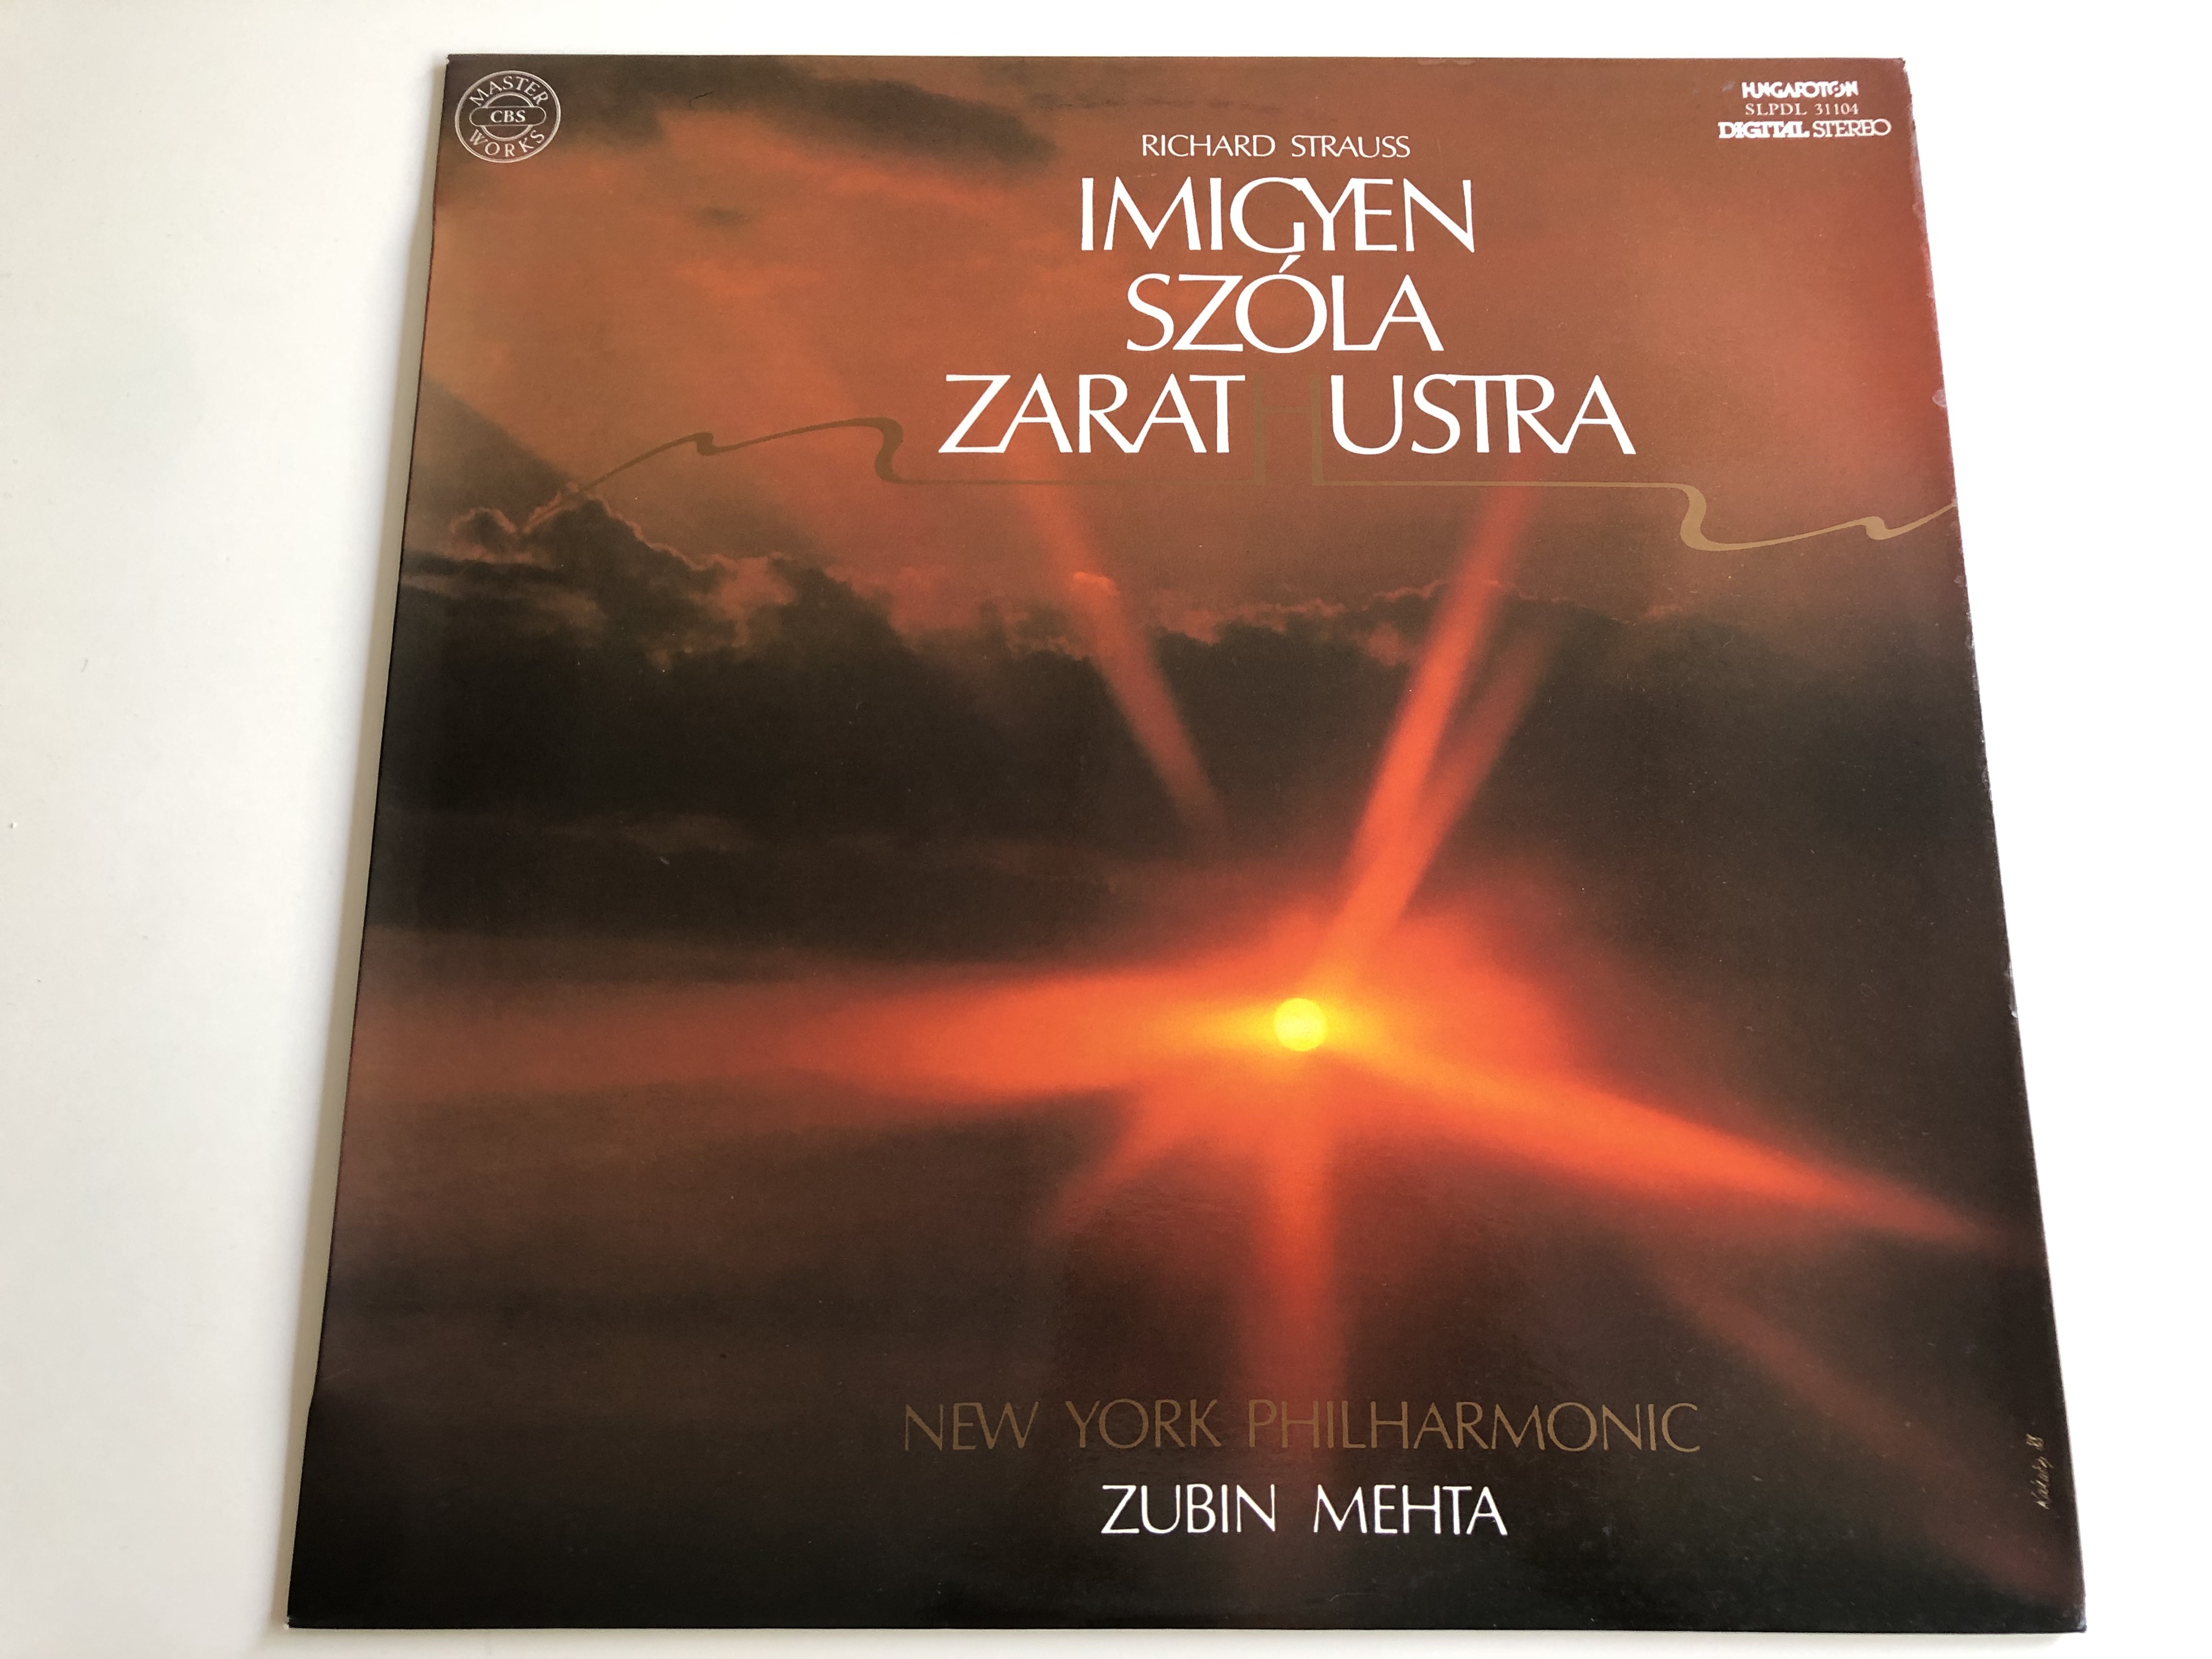 richard-strauss-imigyen-sz-la-zarathustra-conducted-zubin-mehta-new-york-philharmonic-hungaroton-lp-stereo-slpd-31104-1-.jpg